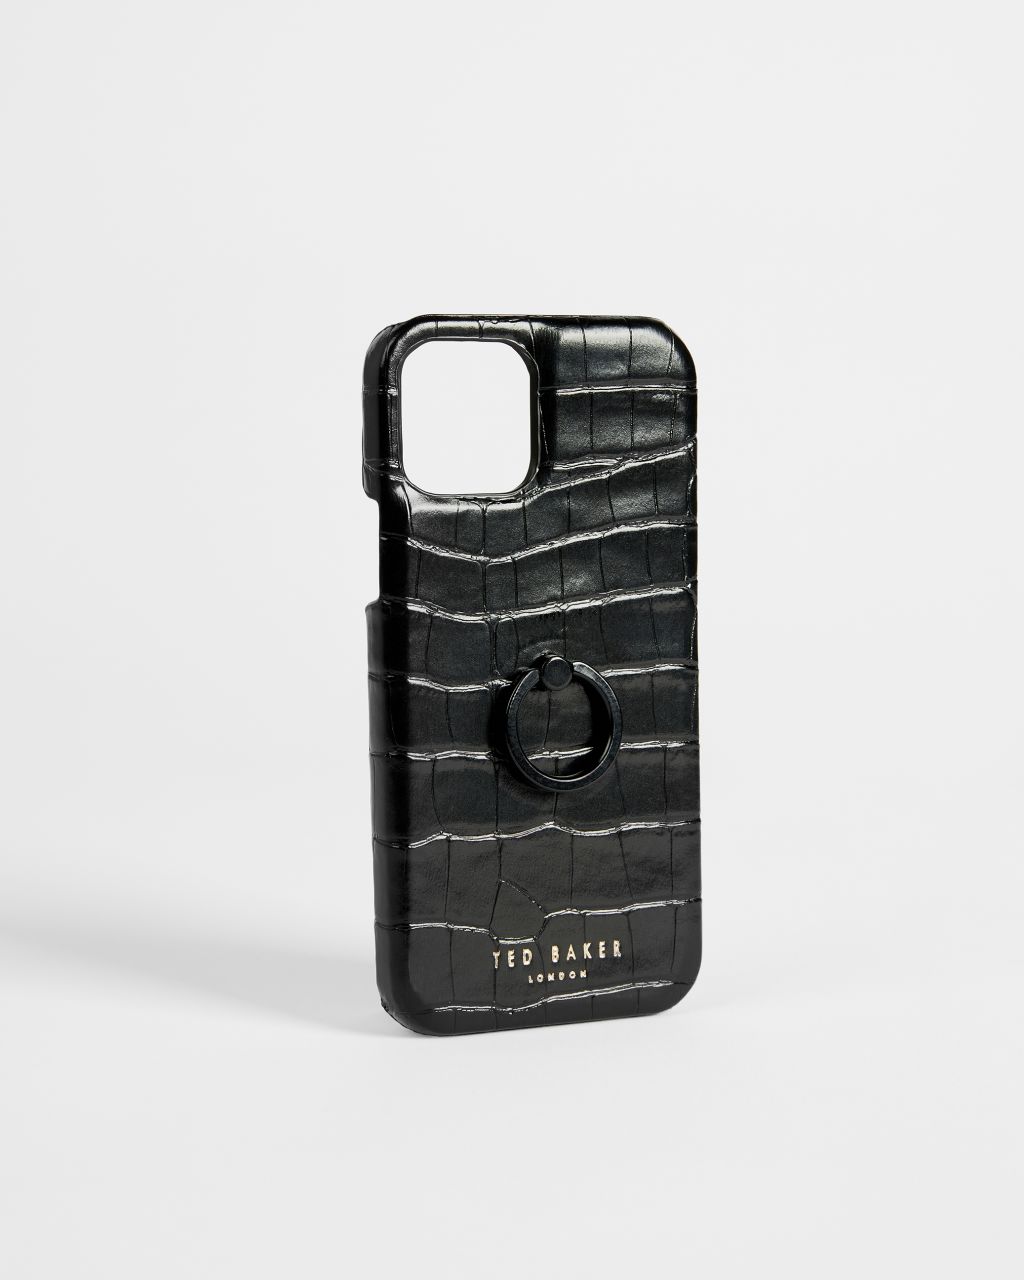 Ted Baker Women's Imitation Croc Iphone 12 / 12 Pro Clip Case in Black, Cattie